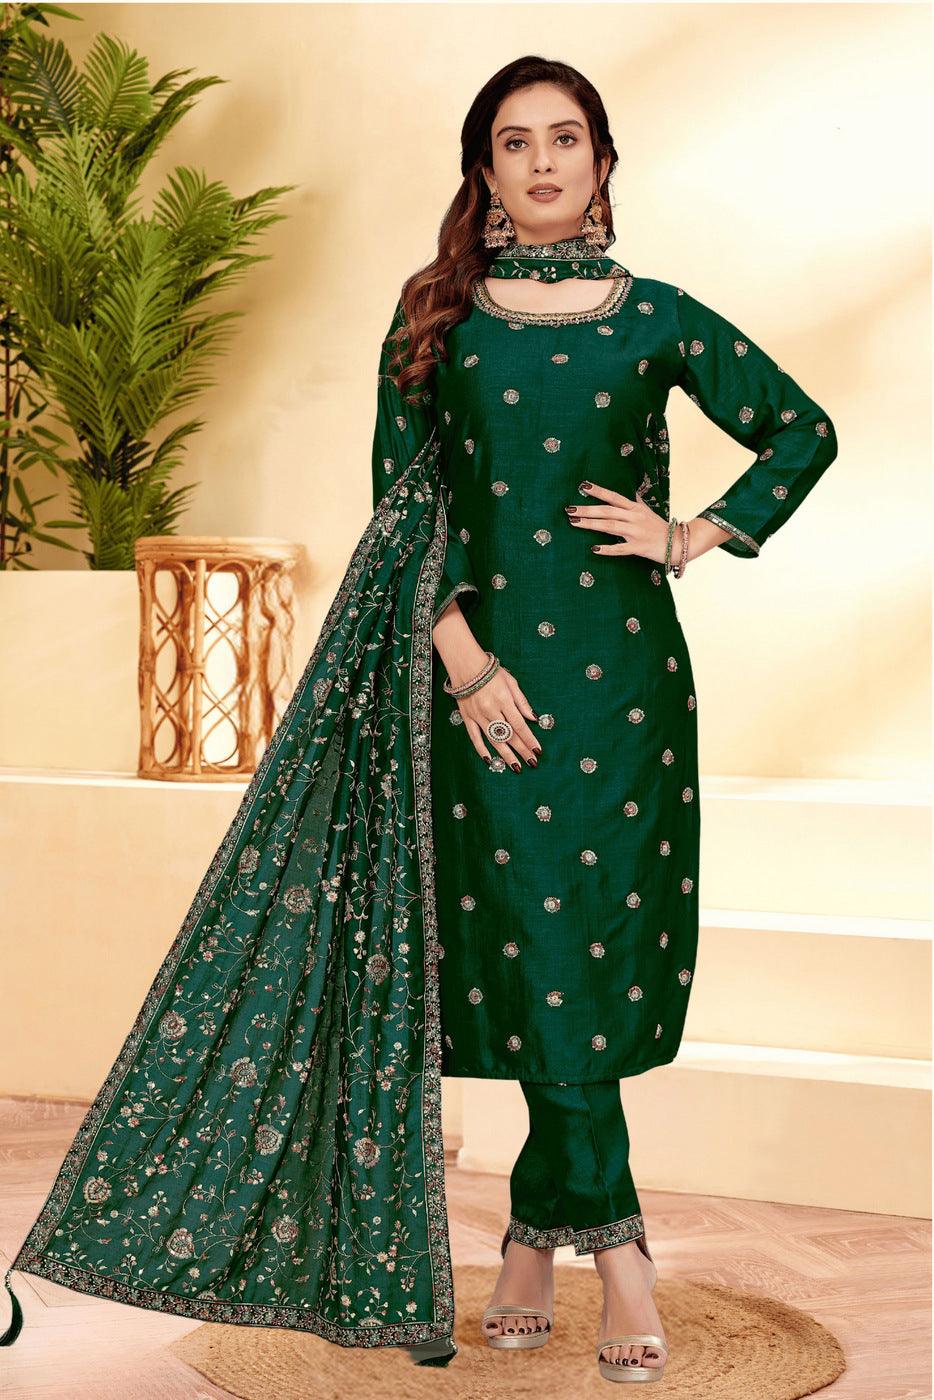 Green Mirror, Beads, Sequins and Thread work Straight Cut Salwar Suit - Seasons Chennai